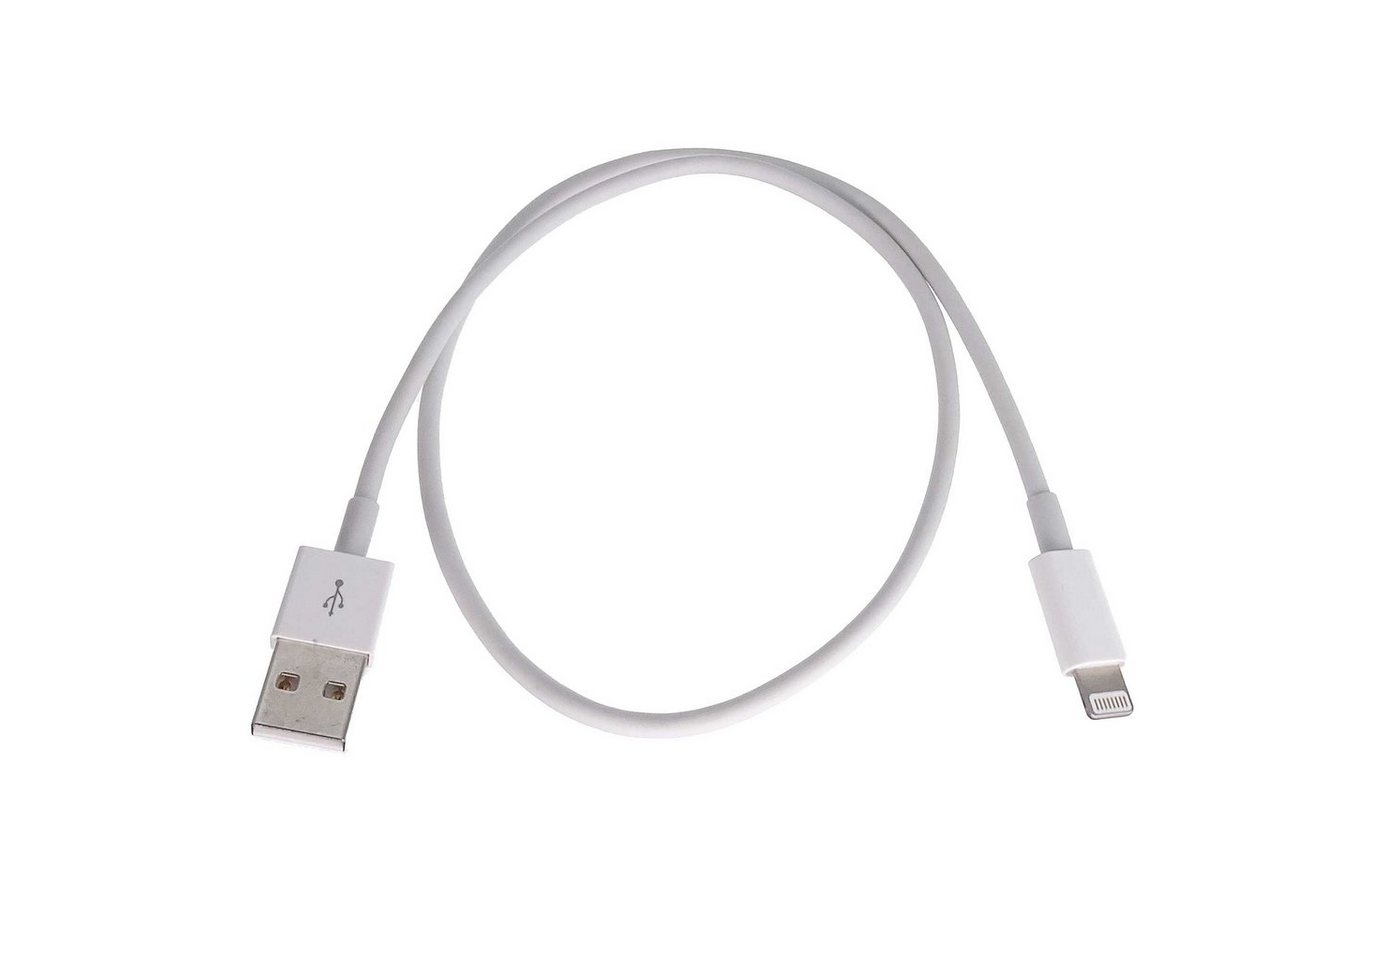 shortix Lightning-Kabel USB auf 8pin. Sync-Kabel iPhone, iPad. 30cm/50cm. Lightningkabel, Lightning, USB Typ A (50 cm), kurz von shortix